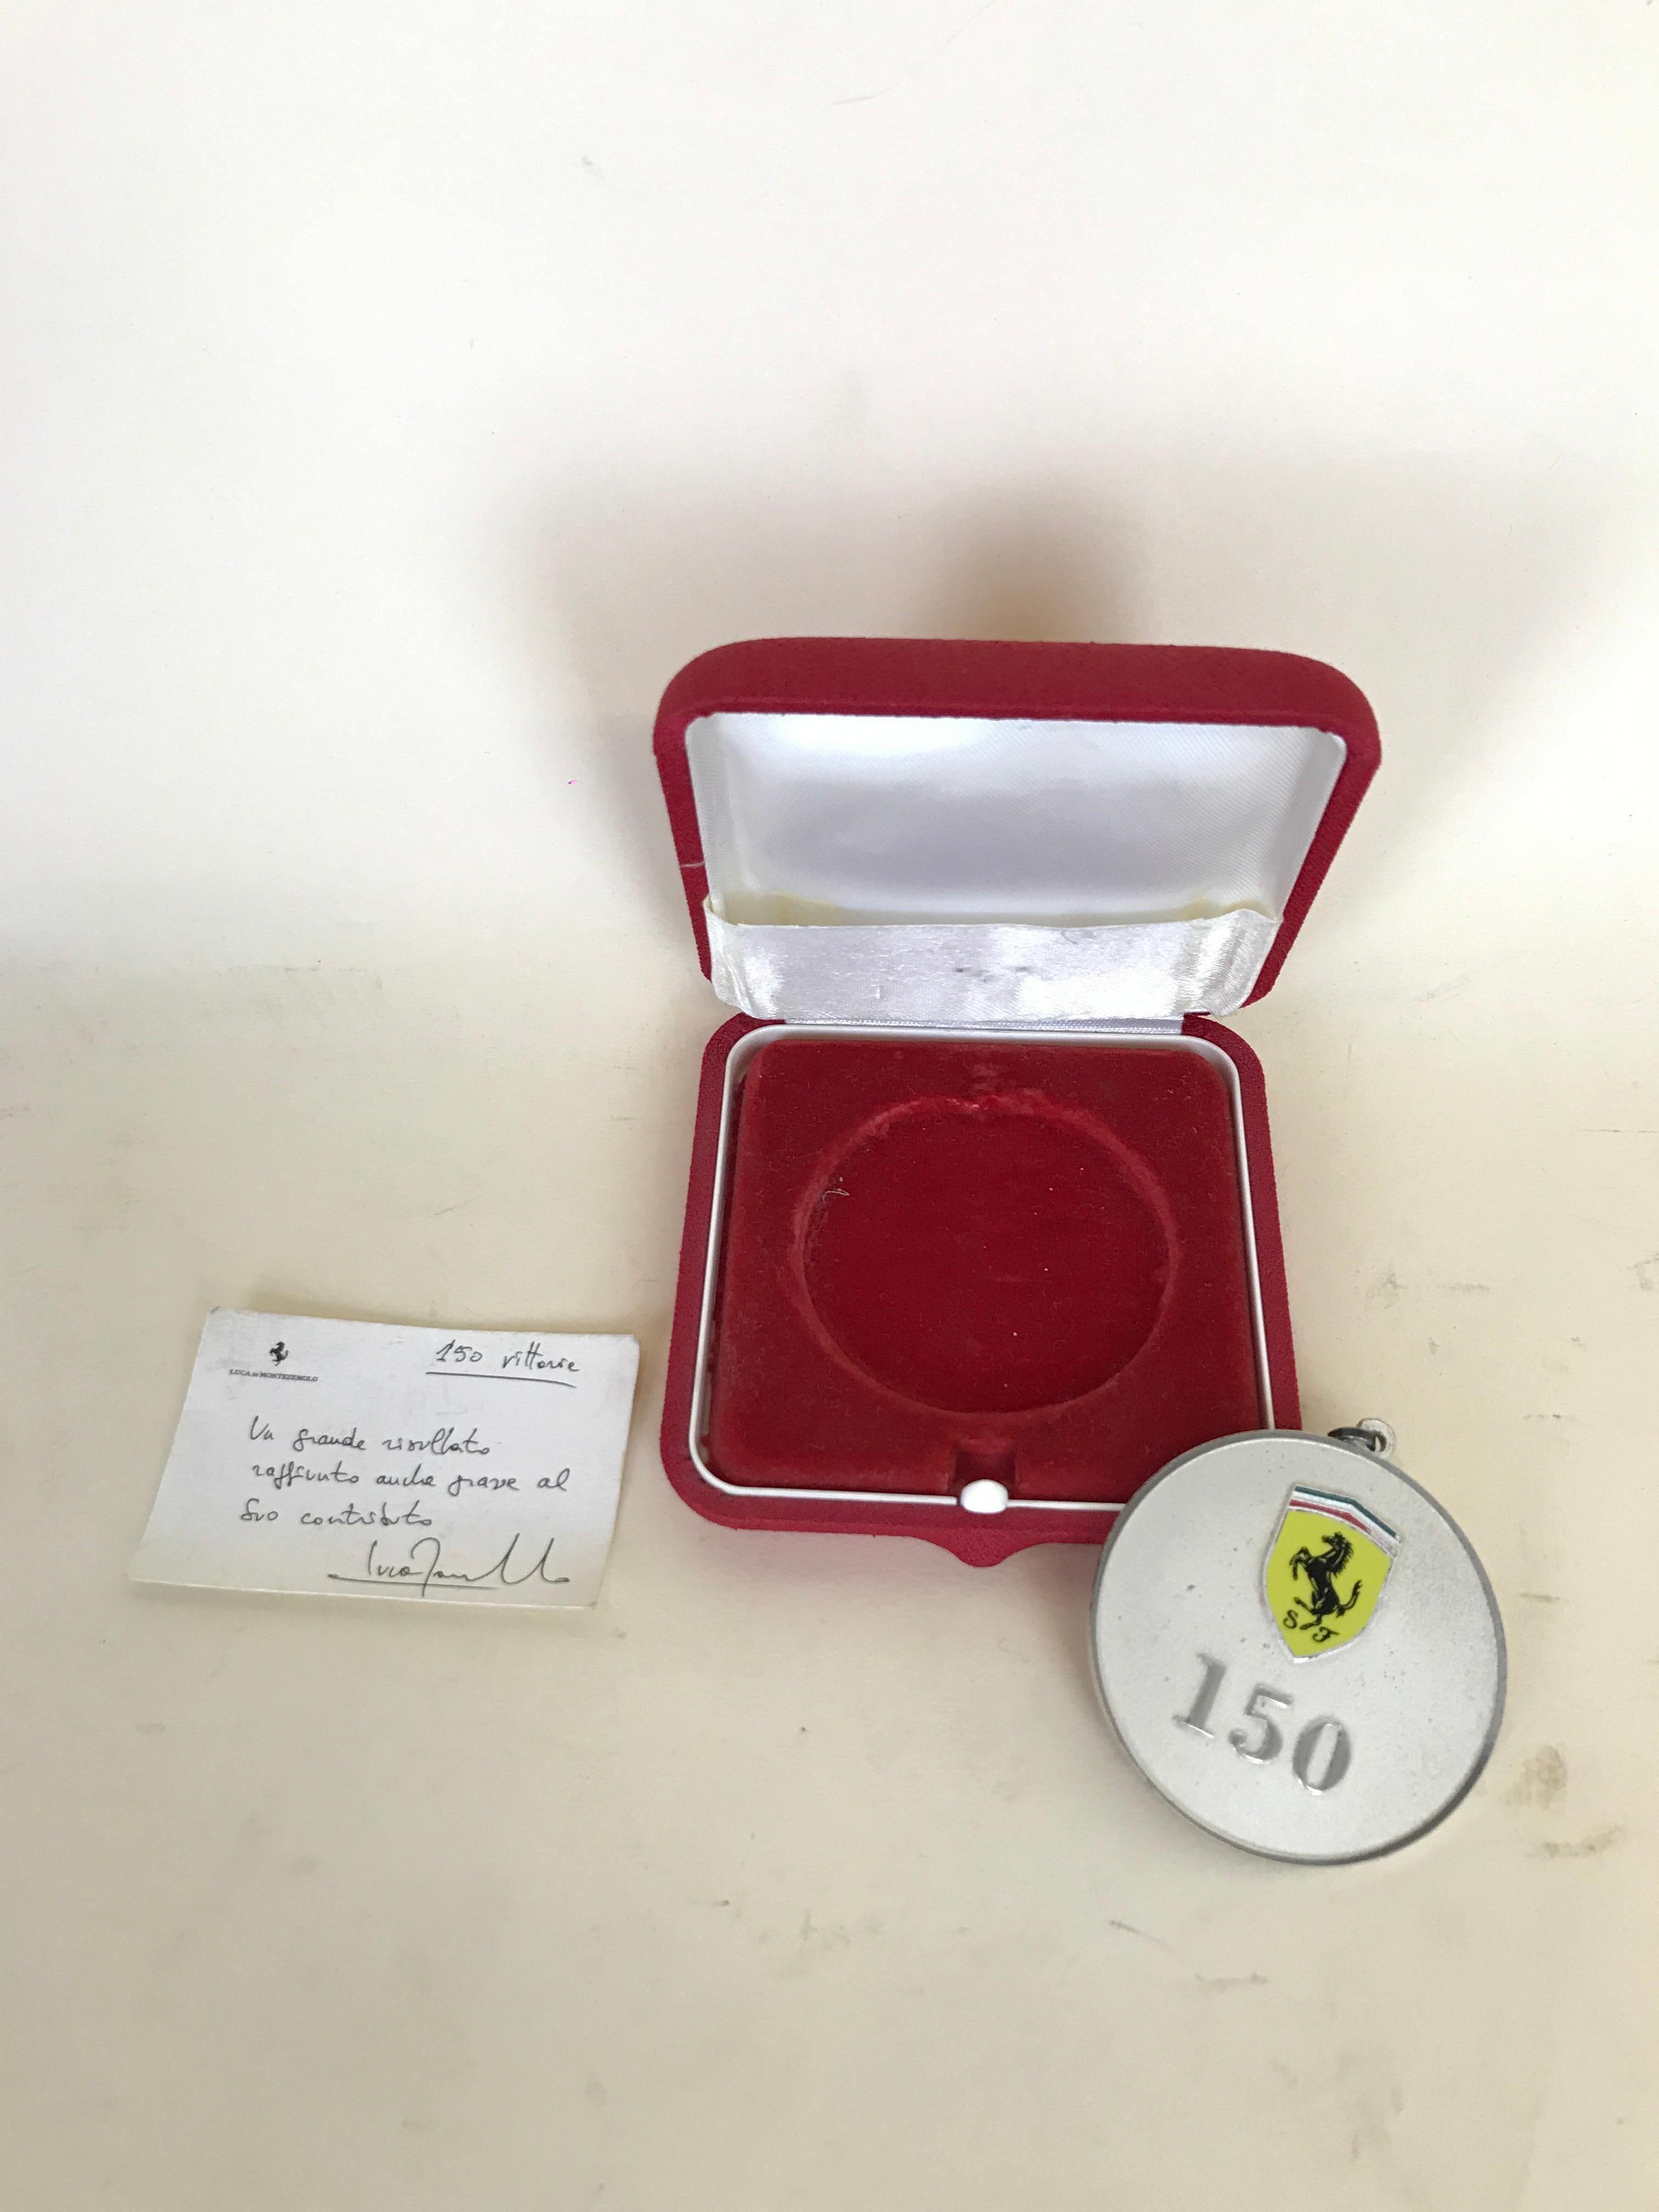 2002 Vintage Ferrari Commemorative Medal Celebrating the 150th Victory of GP For Sale 2